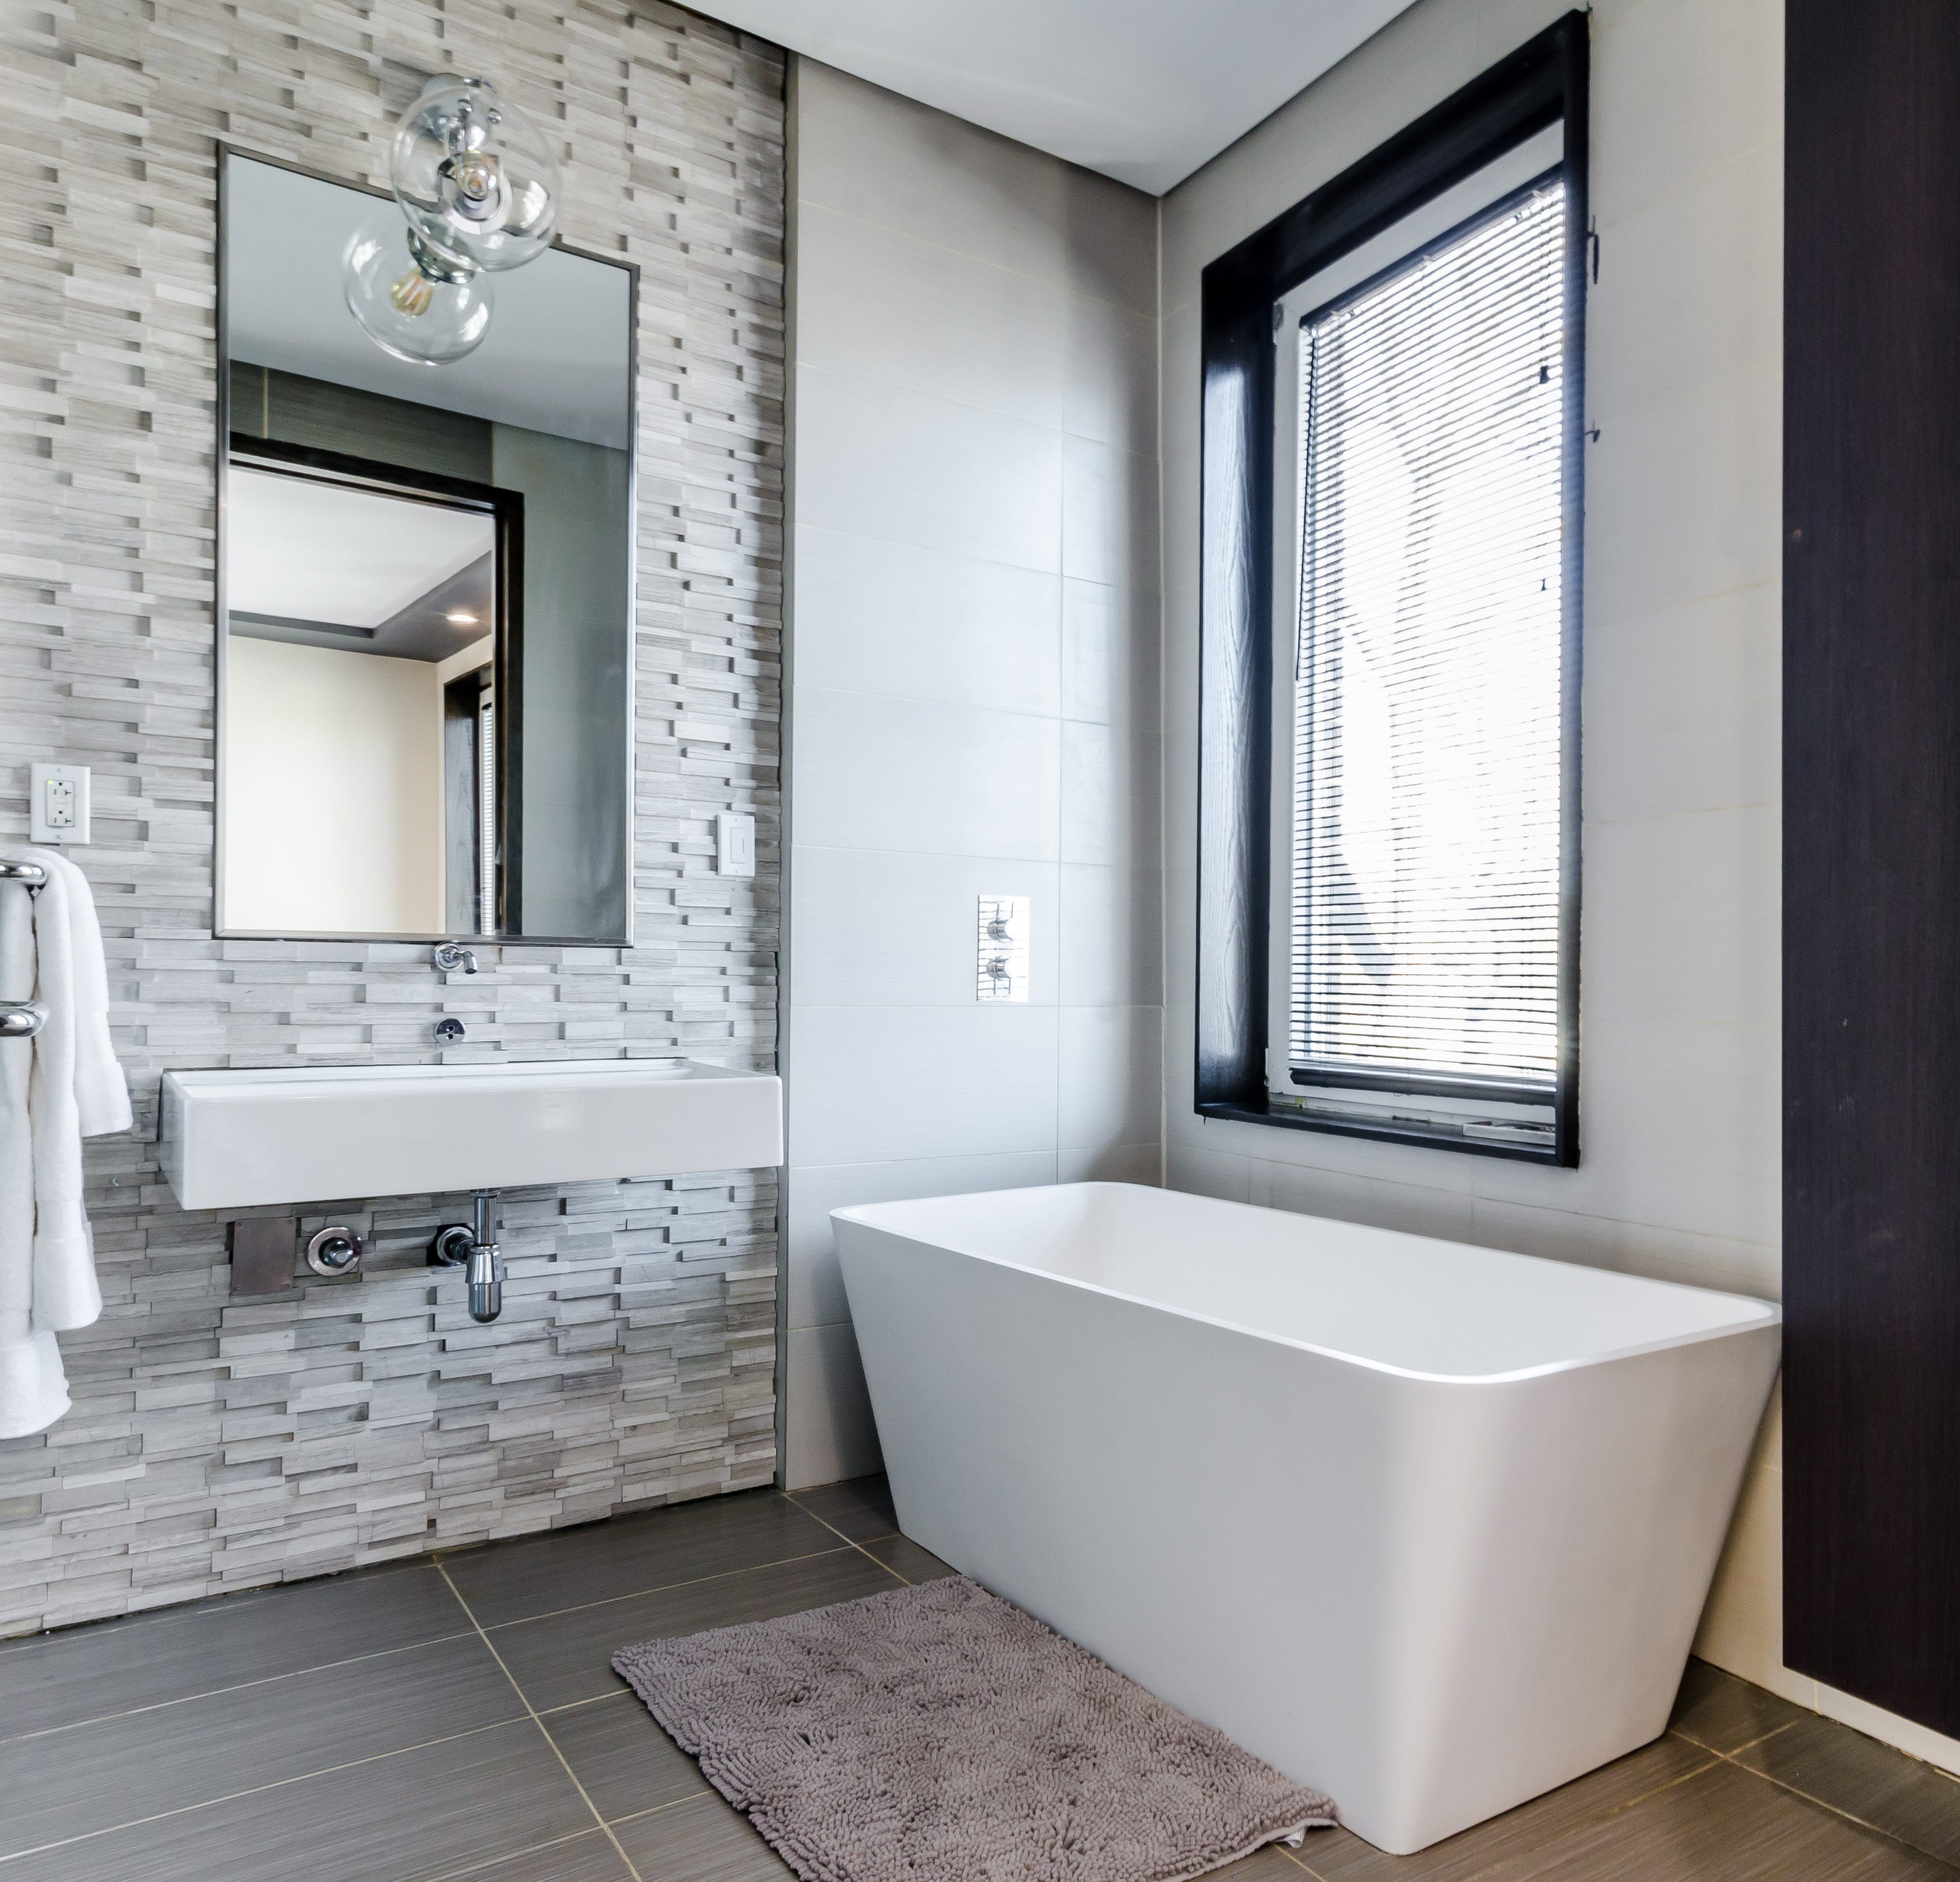 Ideal Flooring Options For Your Bathroom Rebecca Rogers Medium